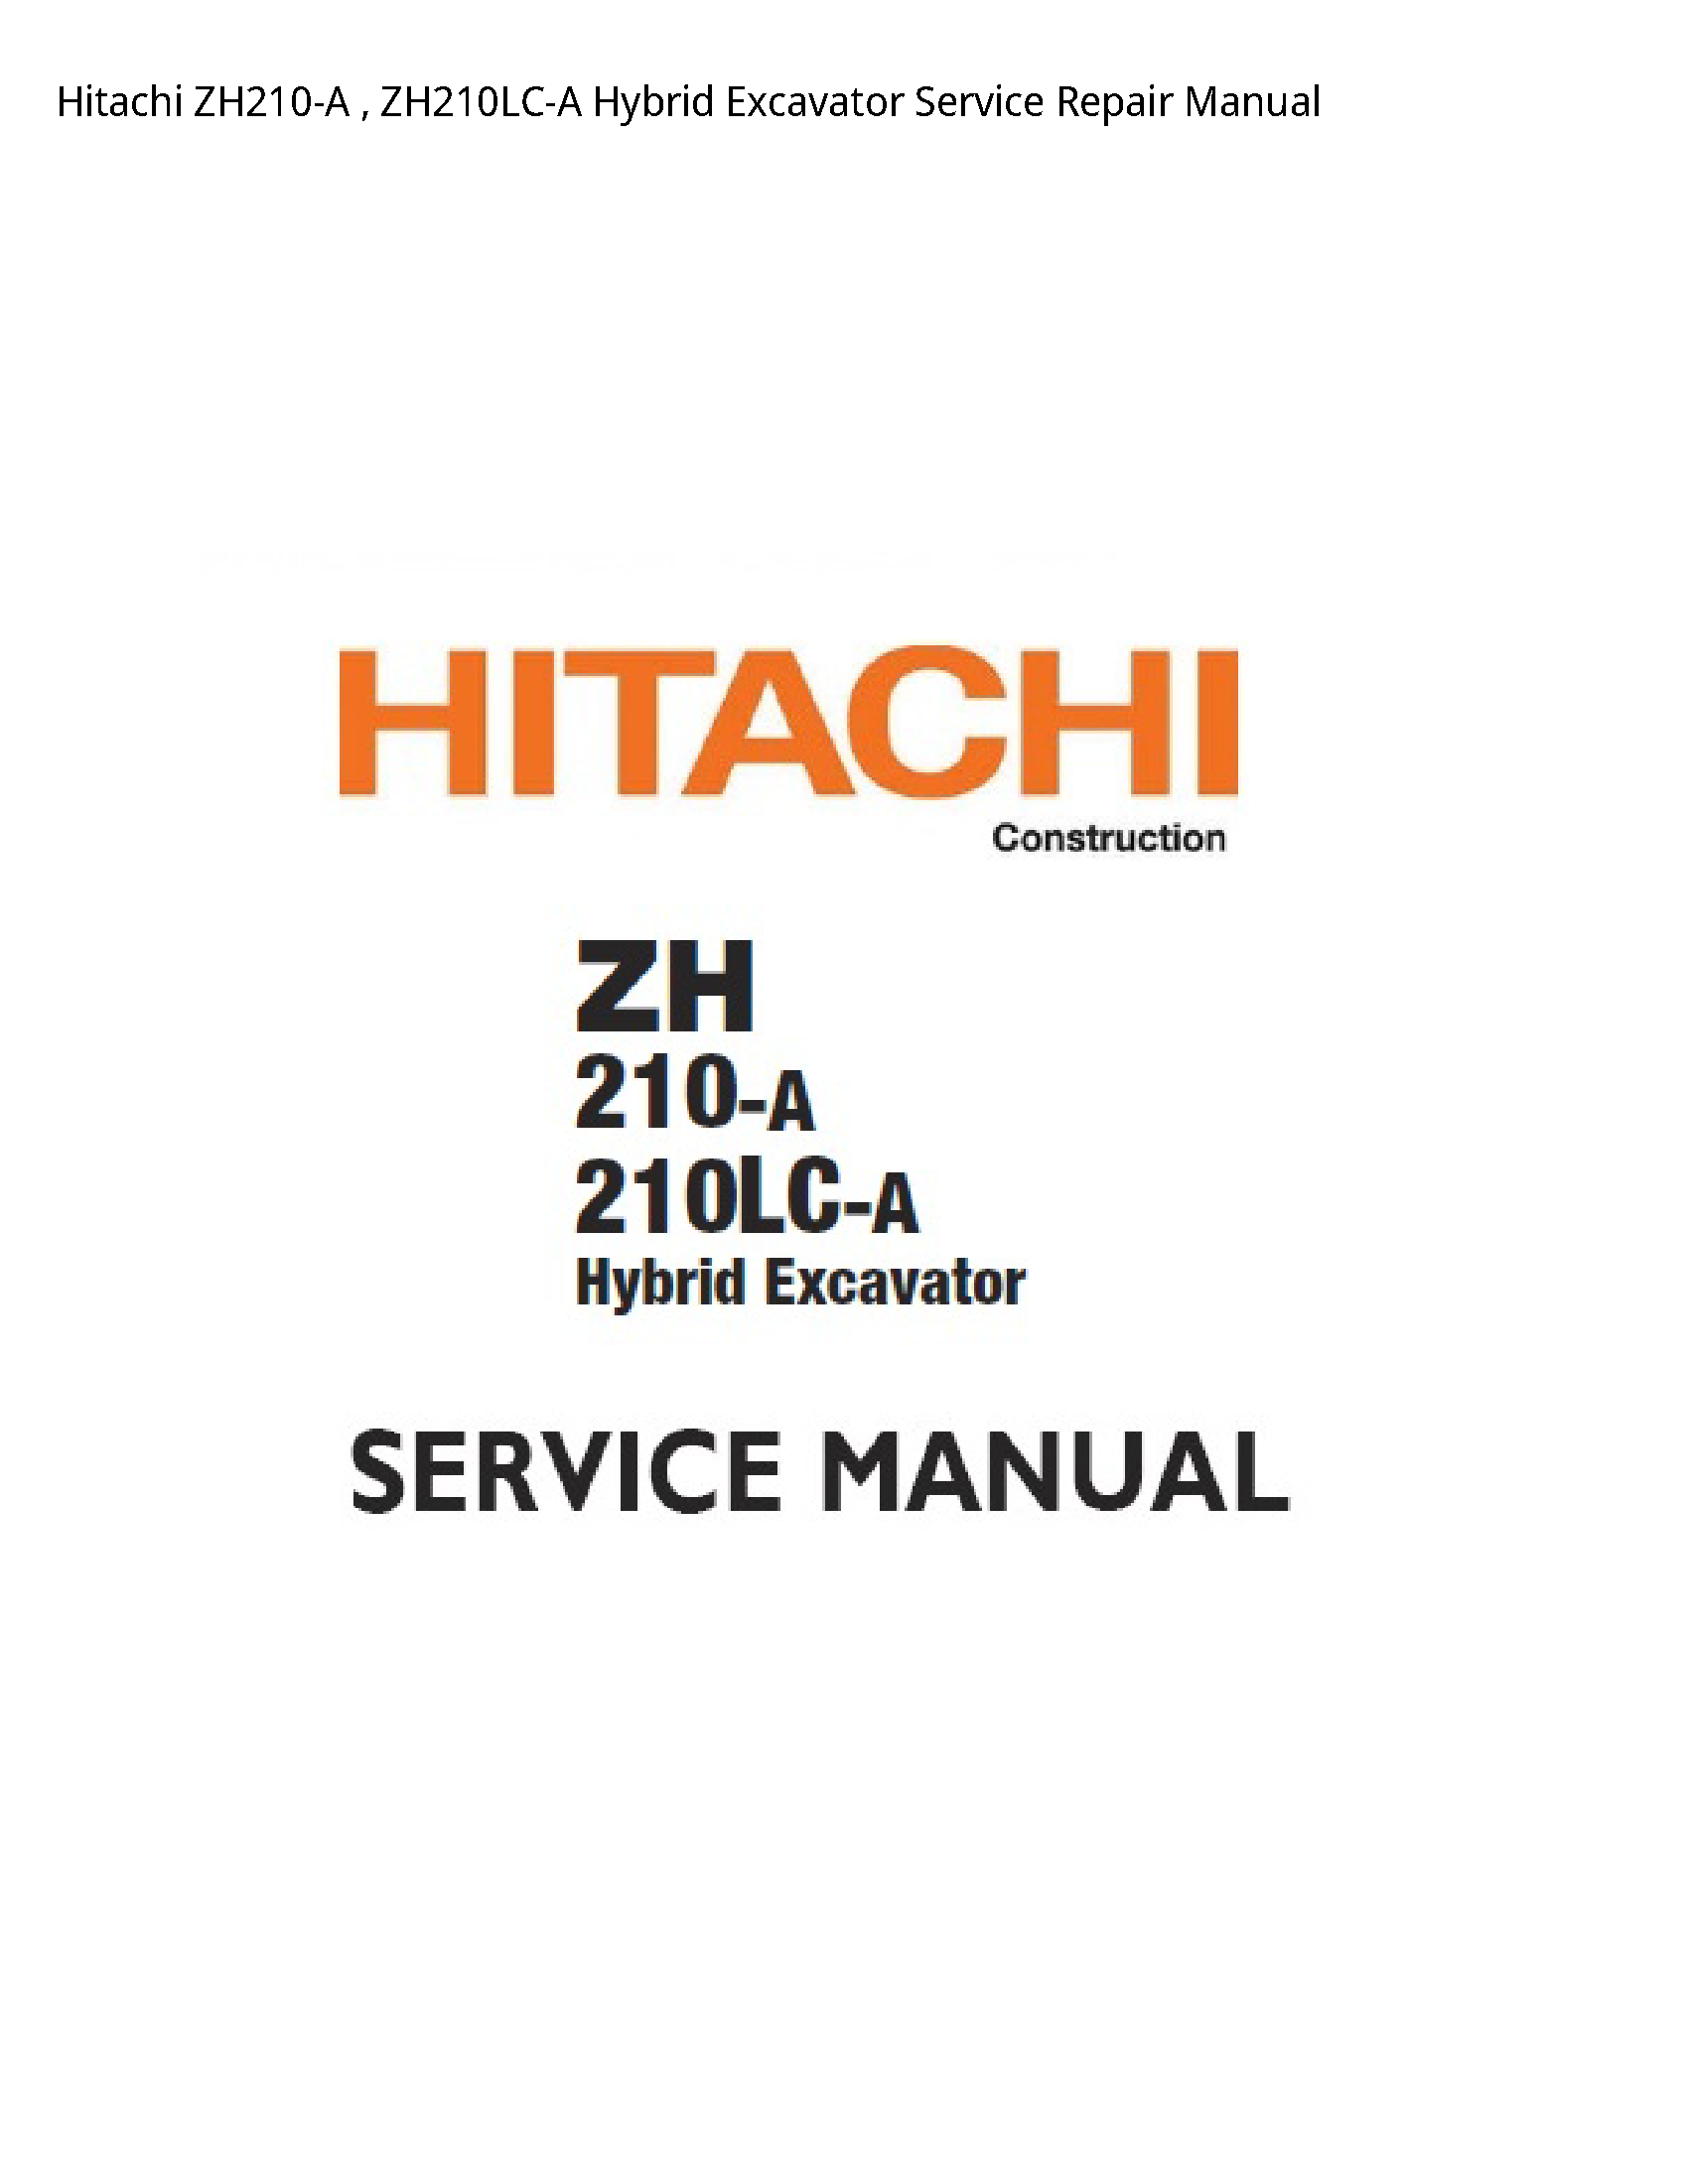 Hitachi ZH210-A Hybrid Excavator manual